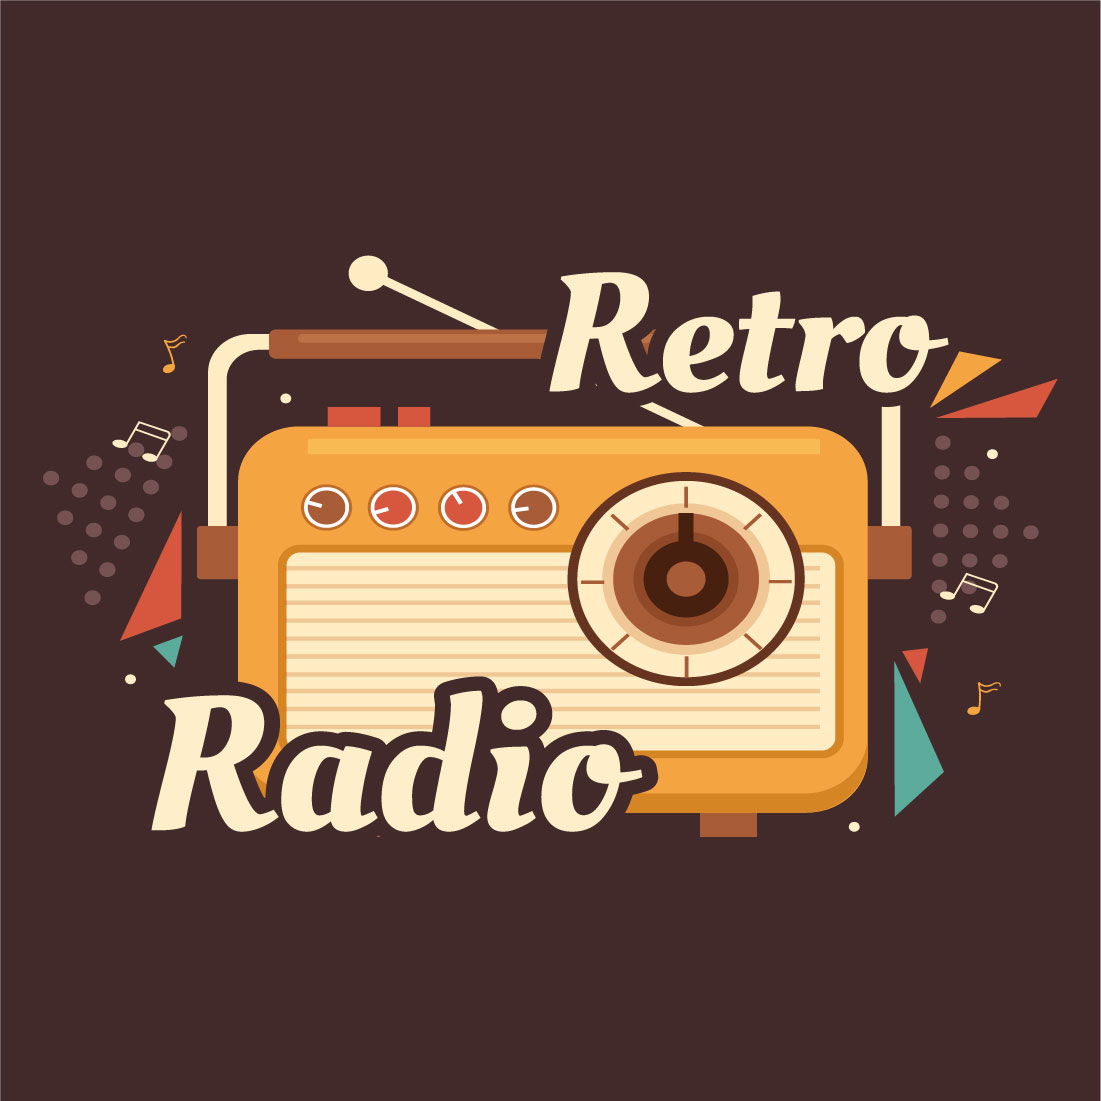 Retro Radio Player Style Illustration cover image.